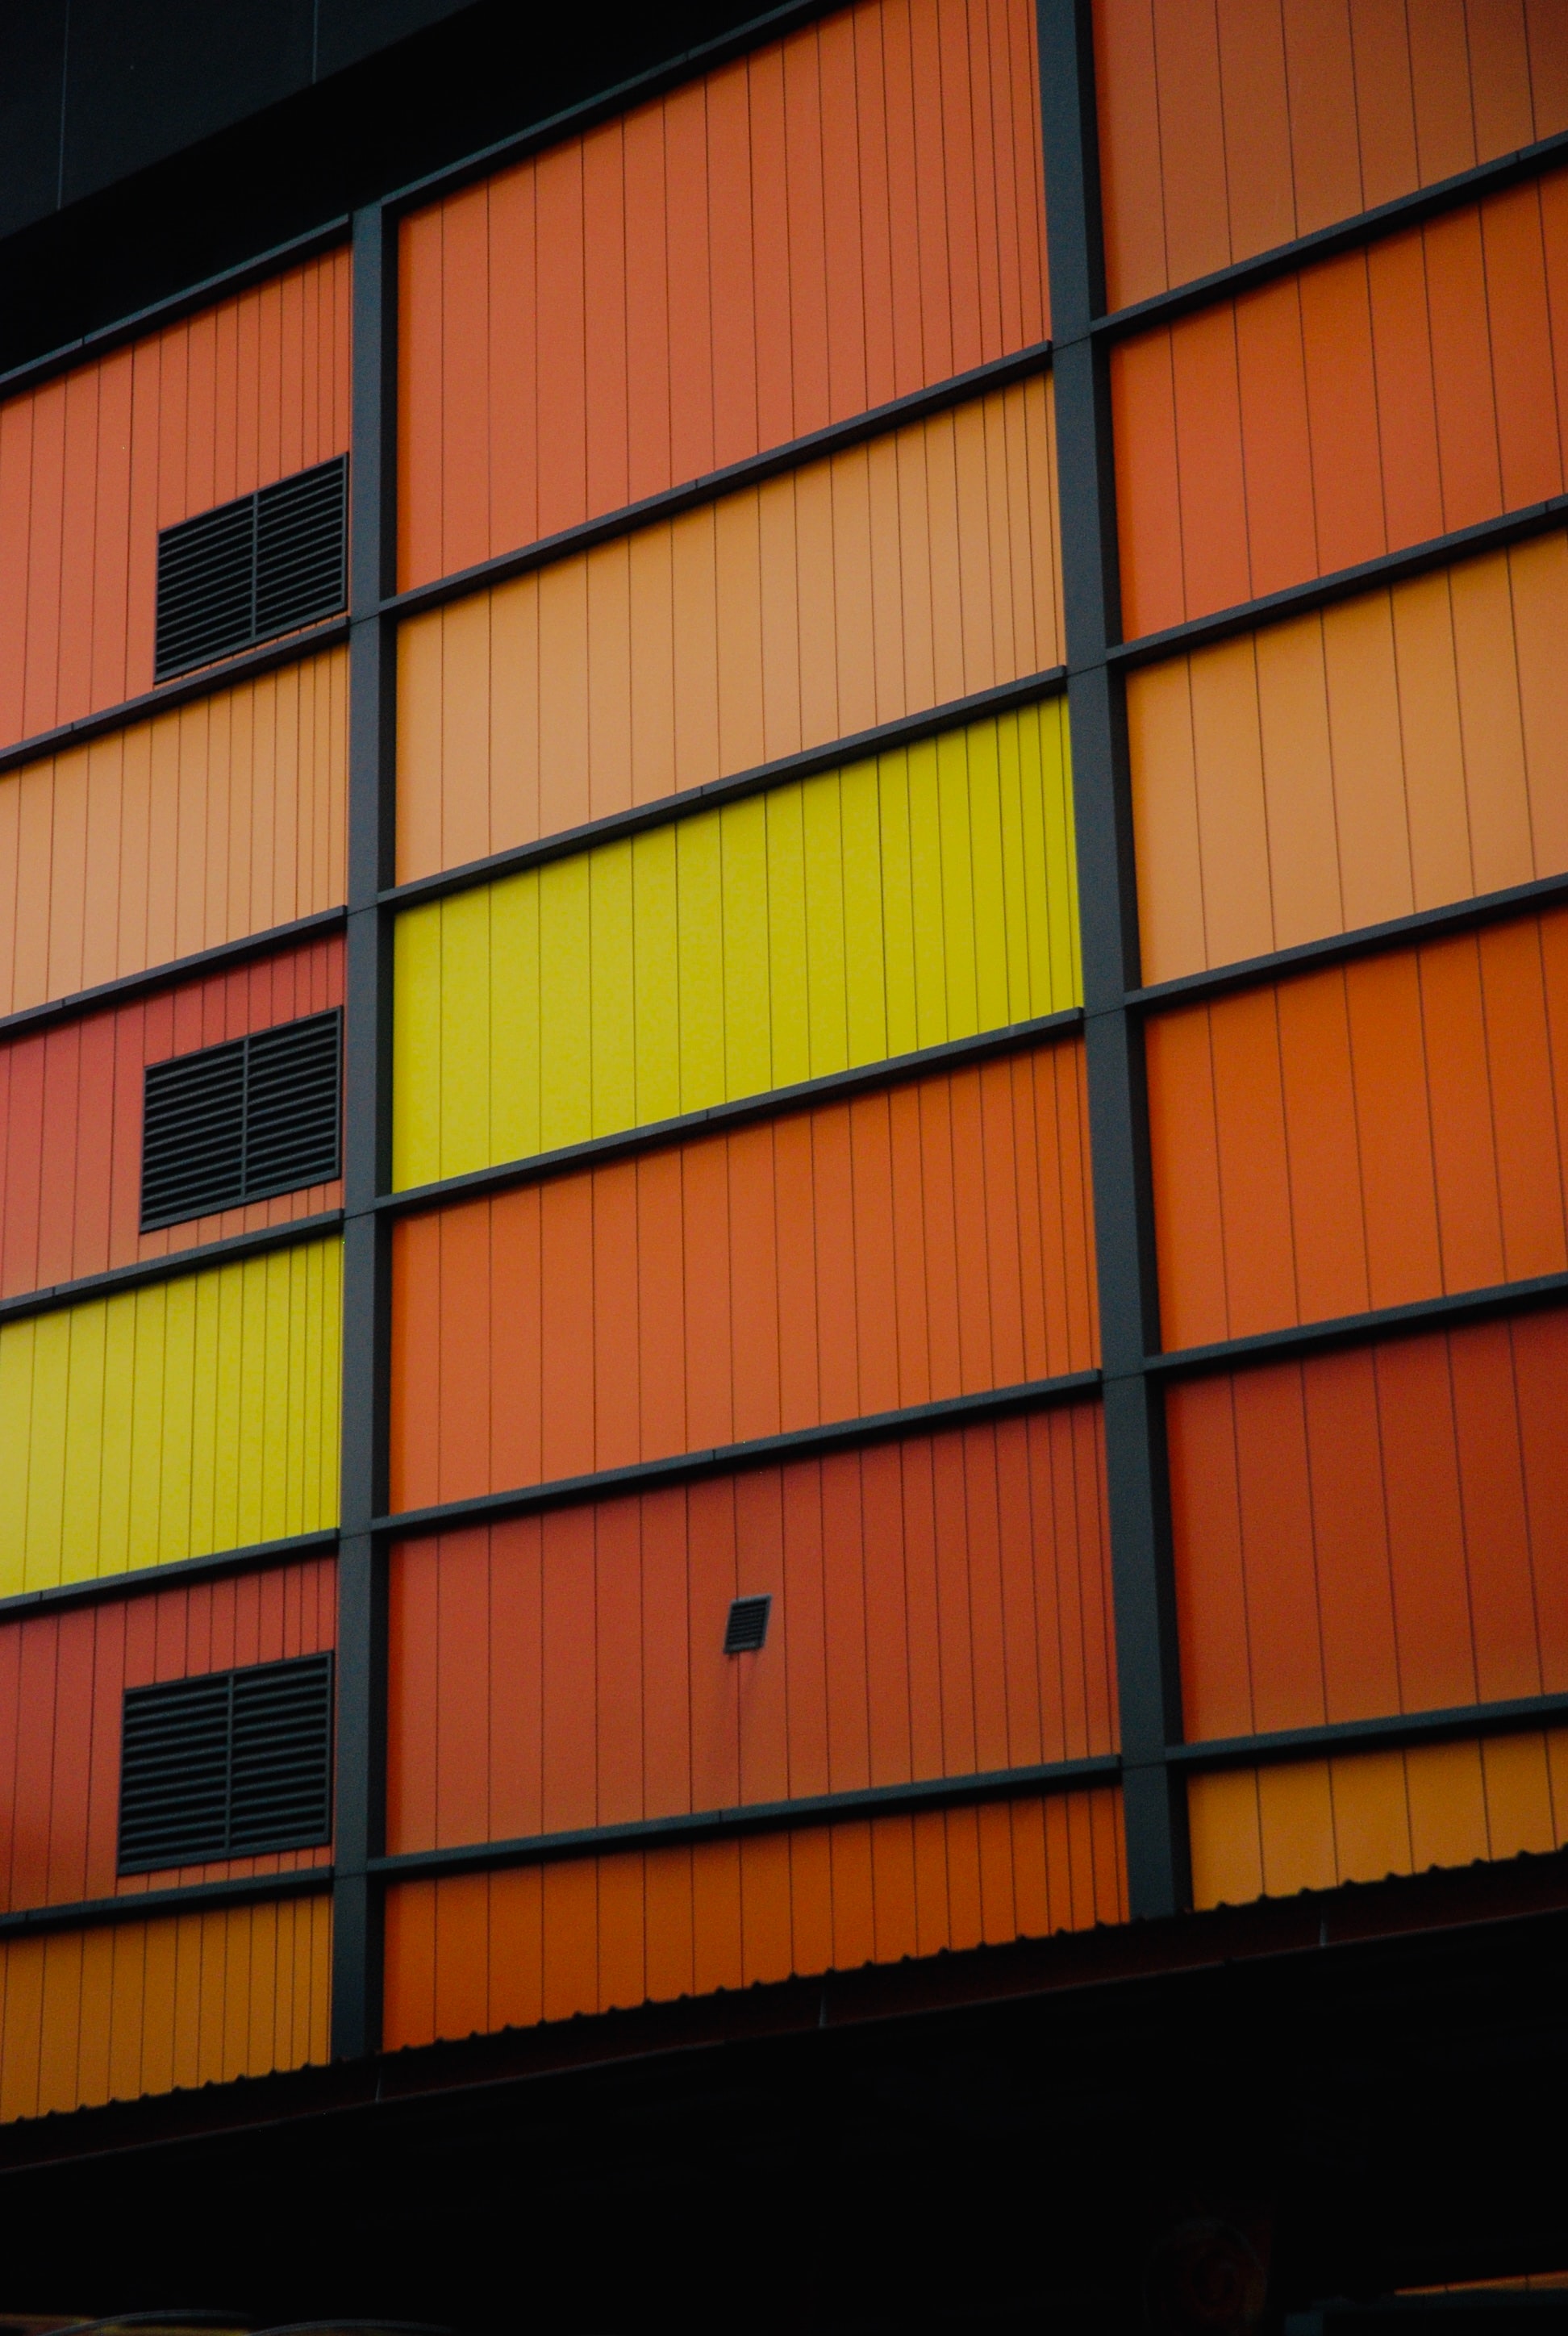 Free HD metal, orange, building, miscellanea, miscellaneous, metallic, facade